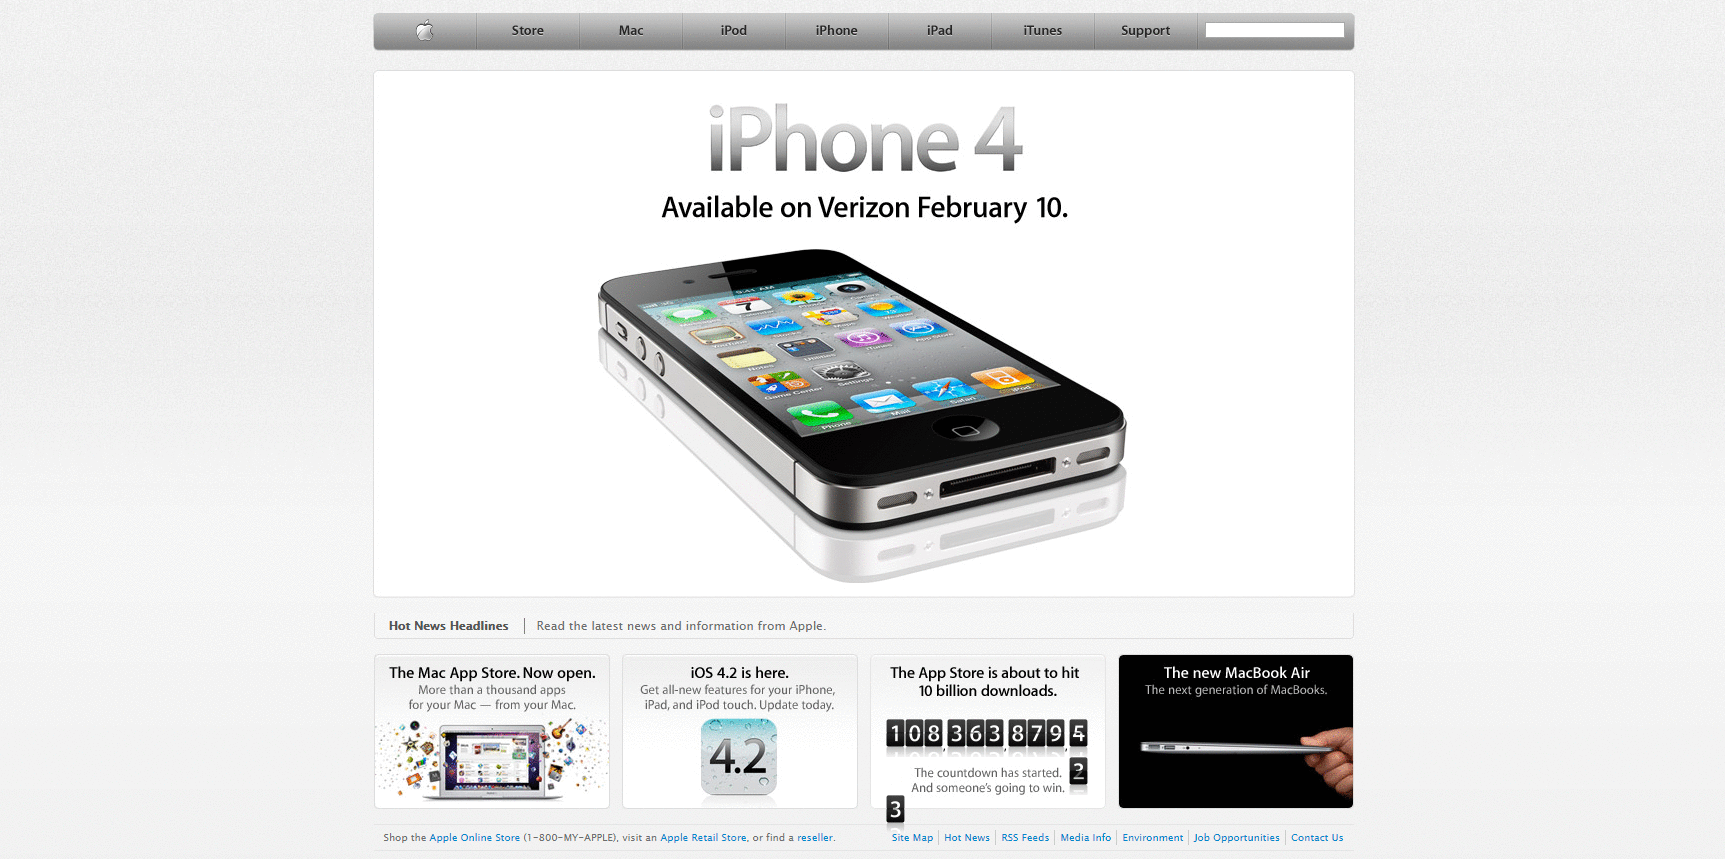 apple.com Website Design in 2011